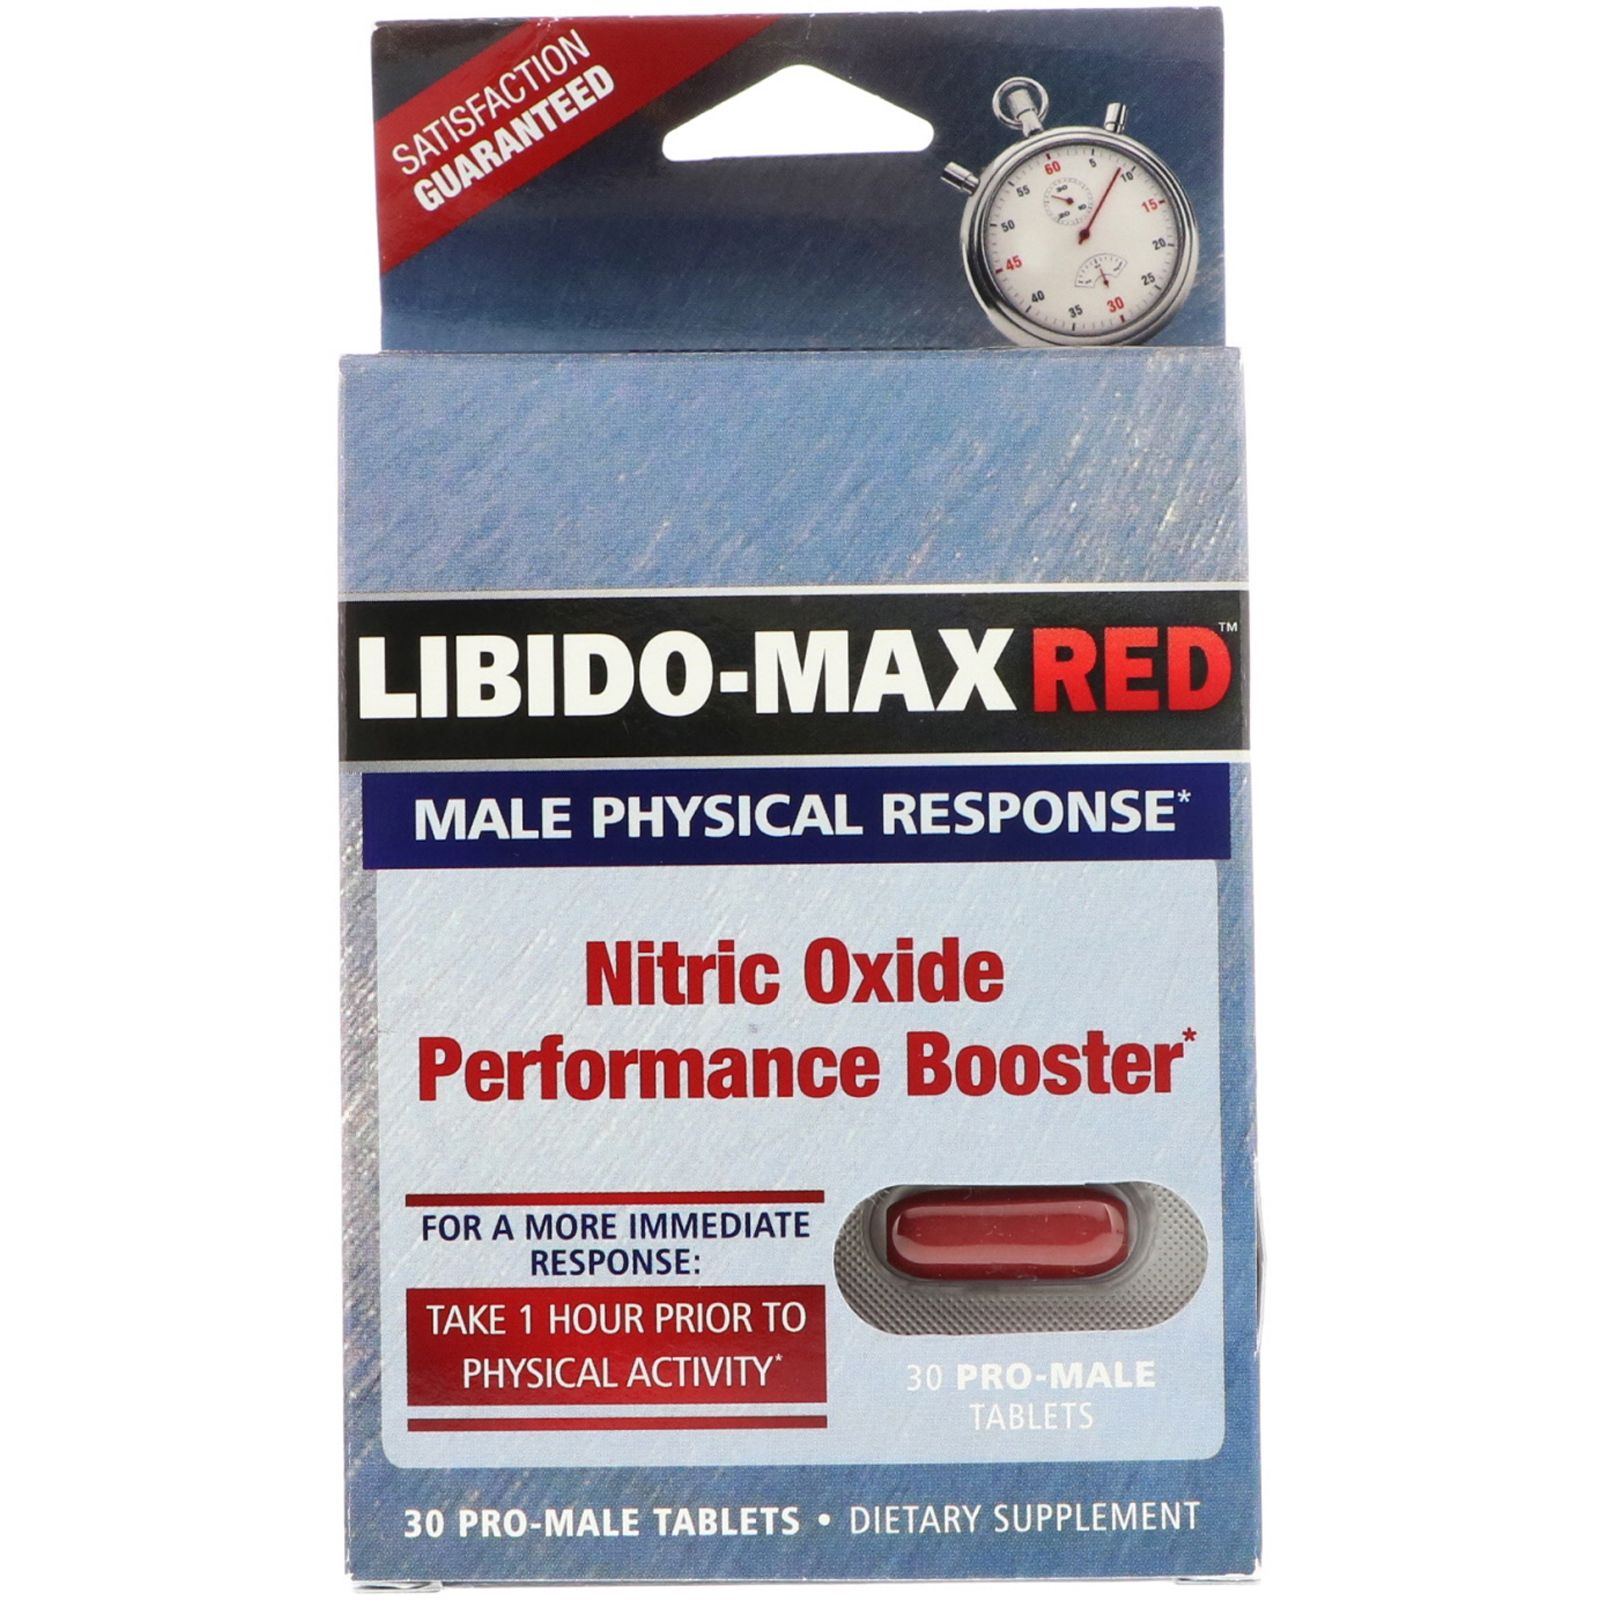 шейкер applied nutrition metal shaker blue appliednutrition Libido-Max Red 30 Pro-Male Tablets